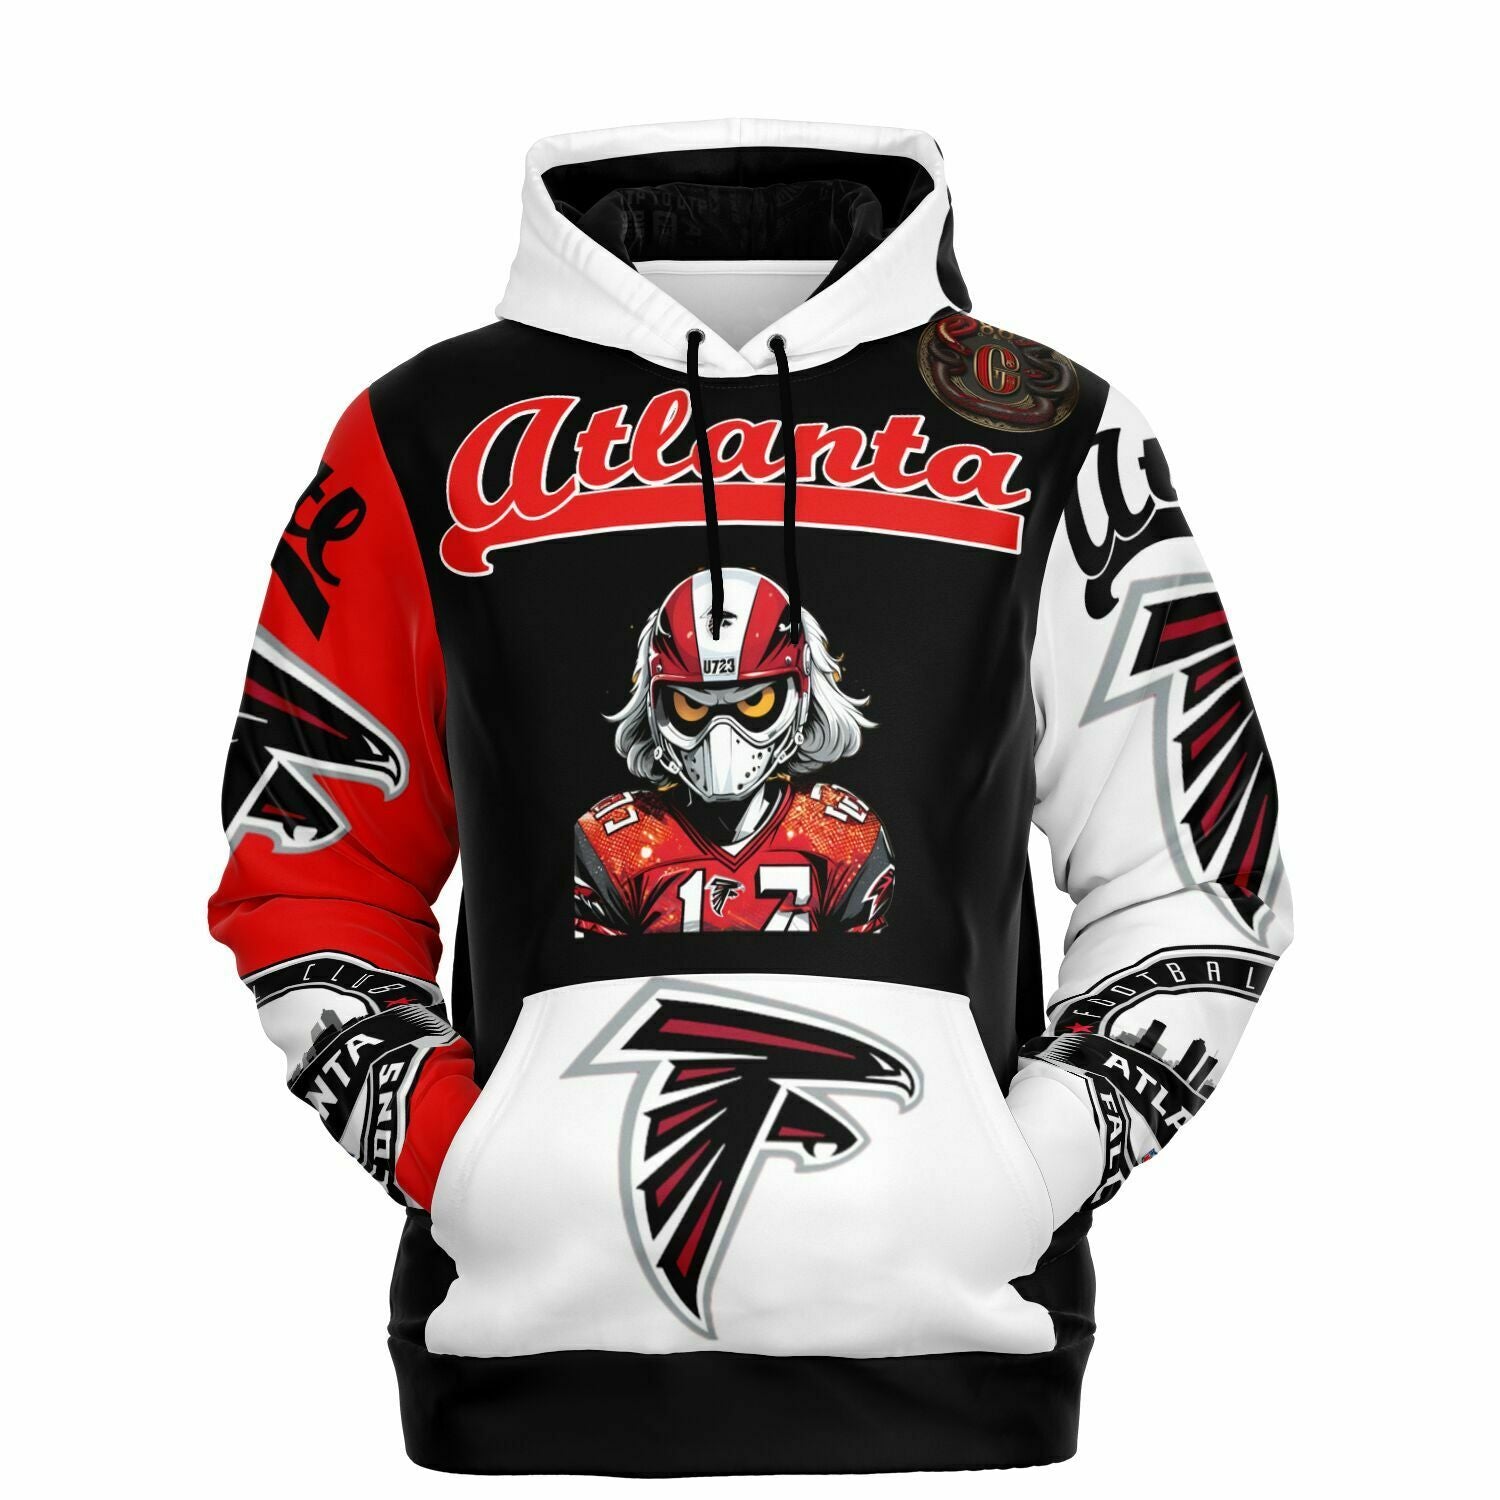  Majestic Threads Unisex Gray Atlanta Falcons Sundays Pullover  Hoodie : Sports & Outdoors